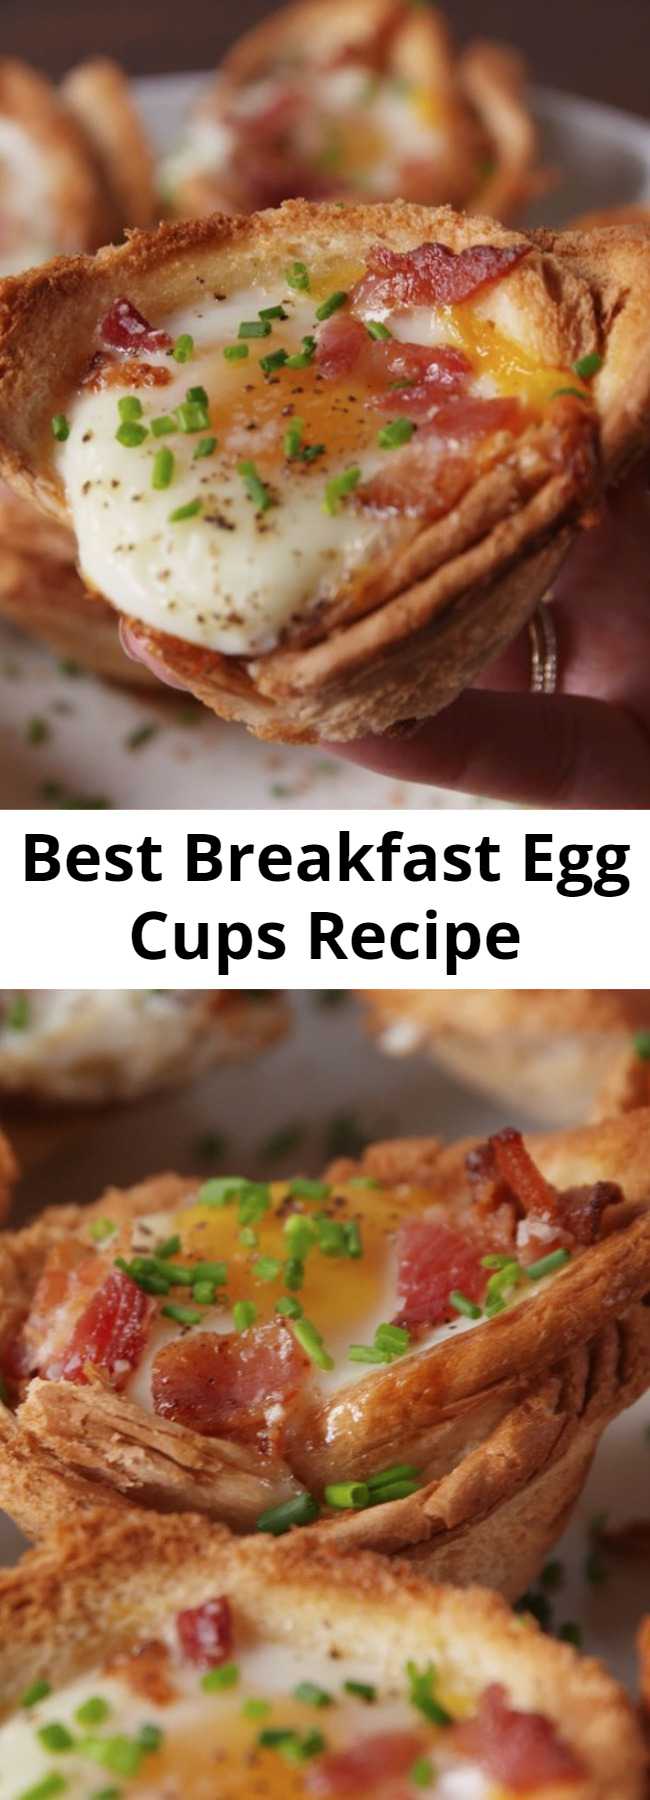 Best Breakfast Egg Cups Recipe - This Breakfast Egg Cups Recipe is the perfect breakfast on-the-go. #food #breakfast #eggs #brunch #easyrecipe